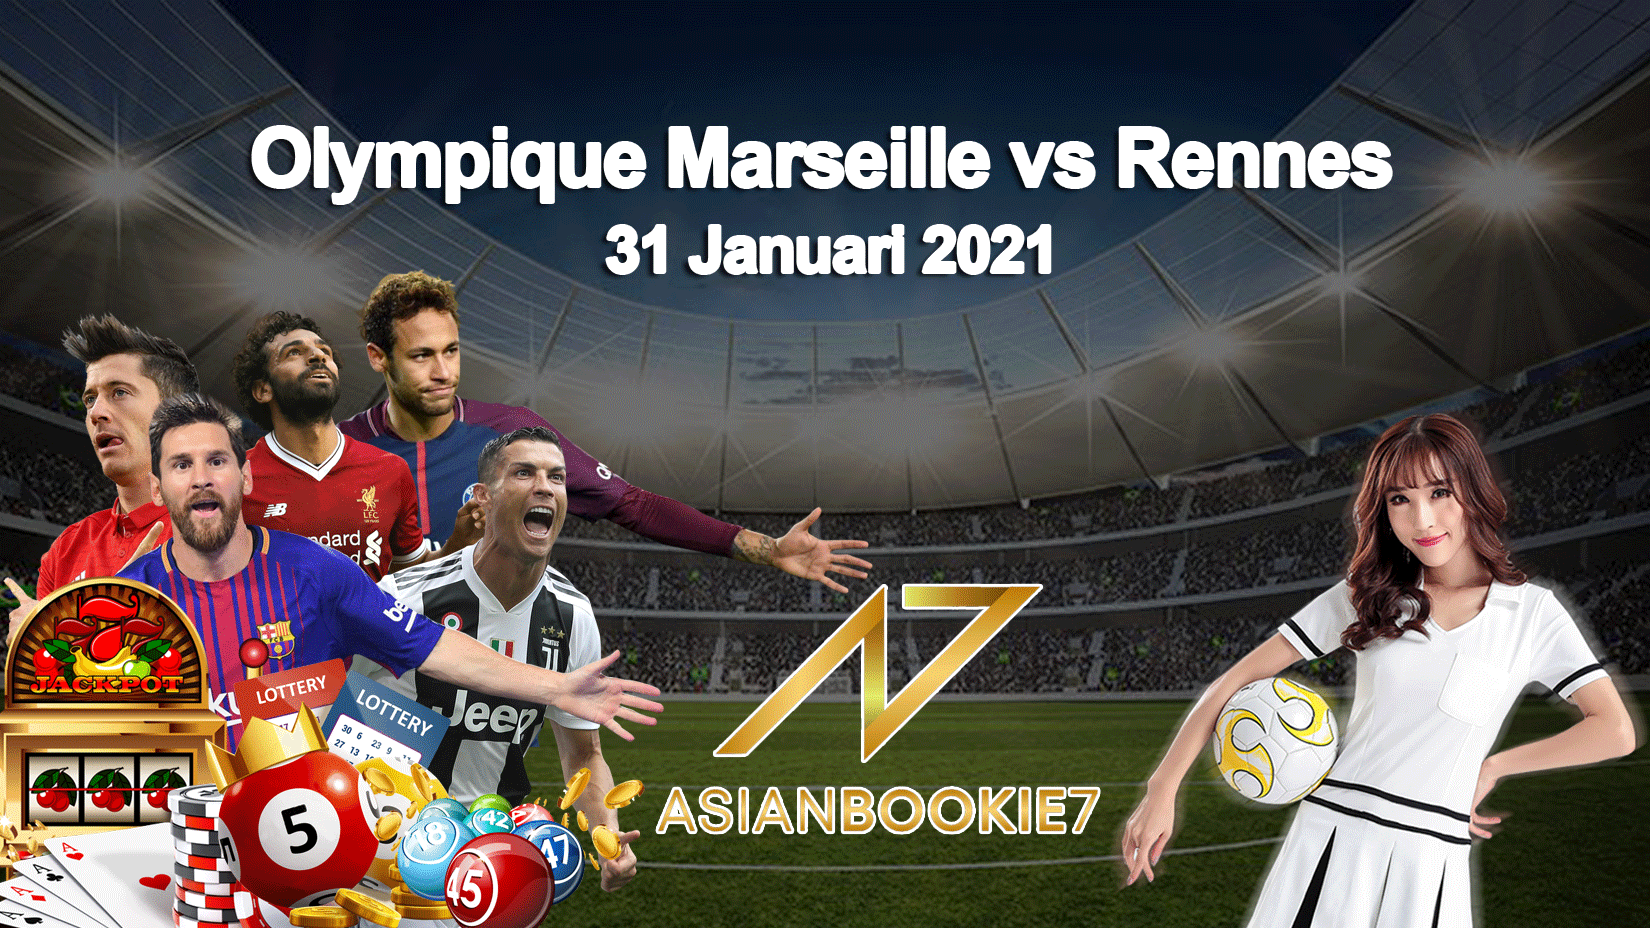 Prediksi-Olympique-Marseille-vs-Rennes-31-Januari-2021